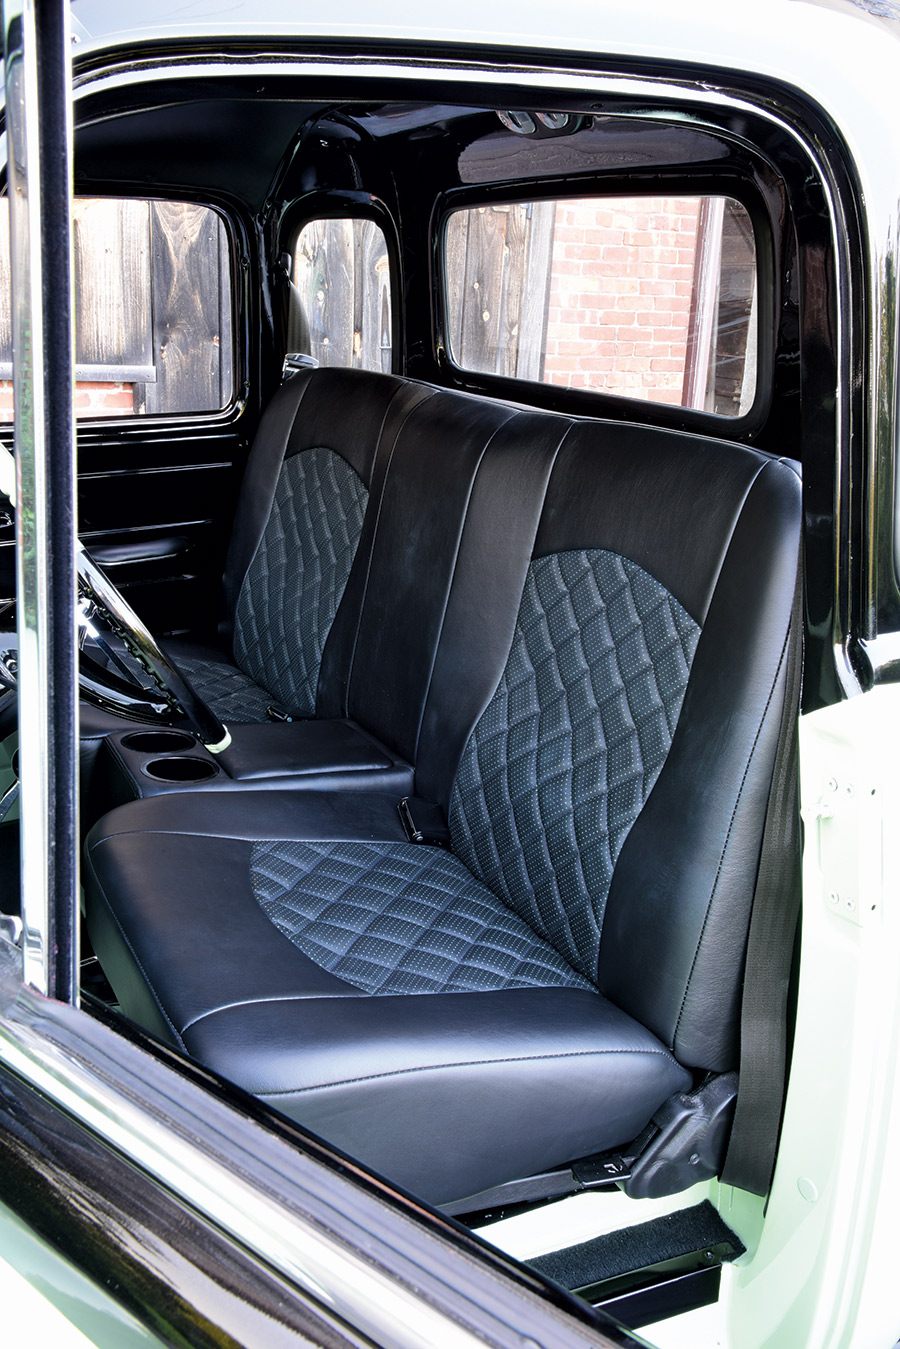 '49 Chevy seats